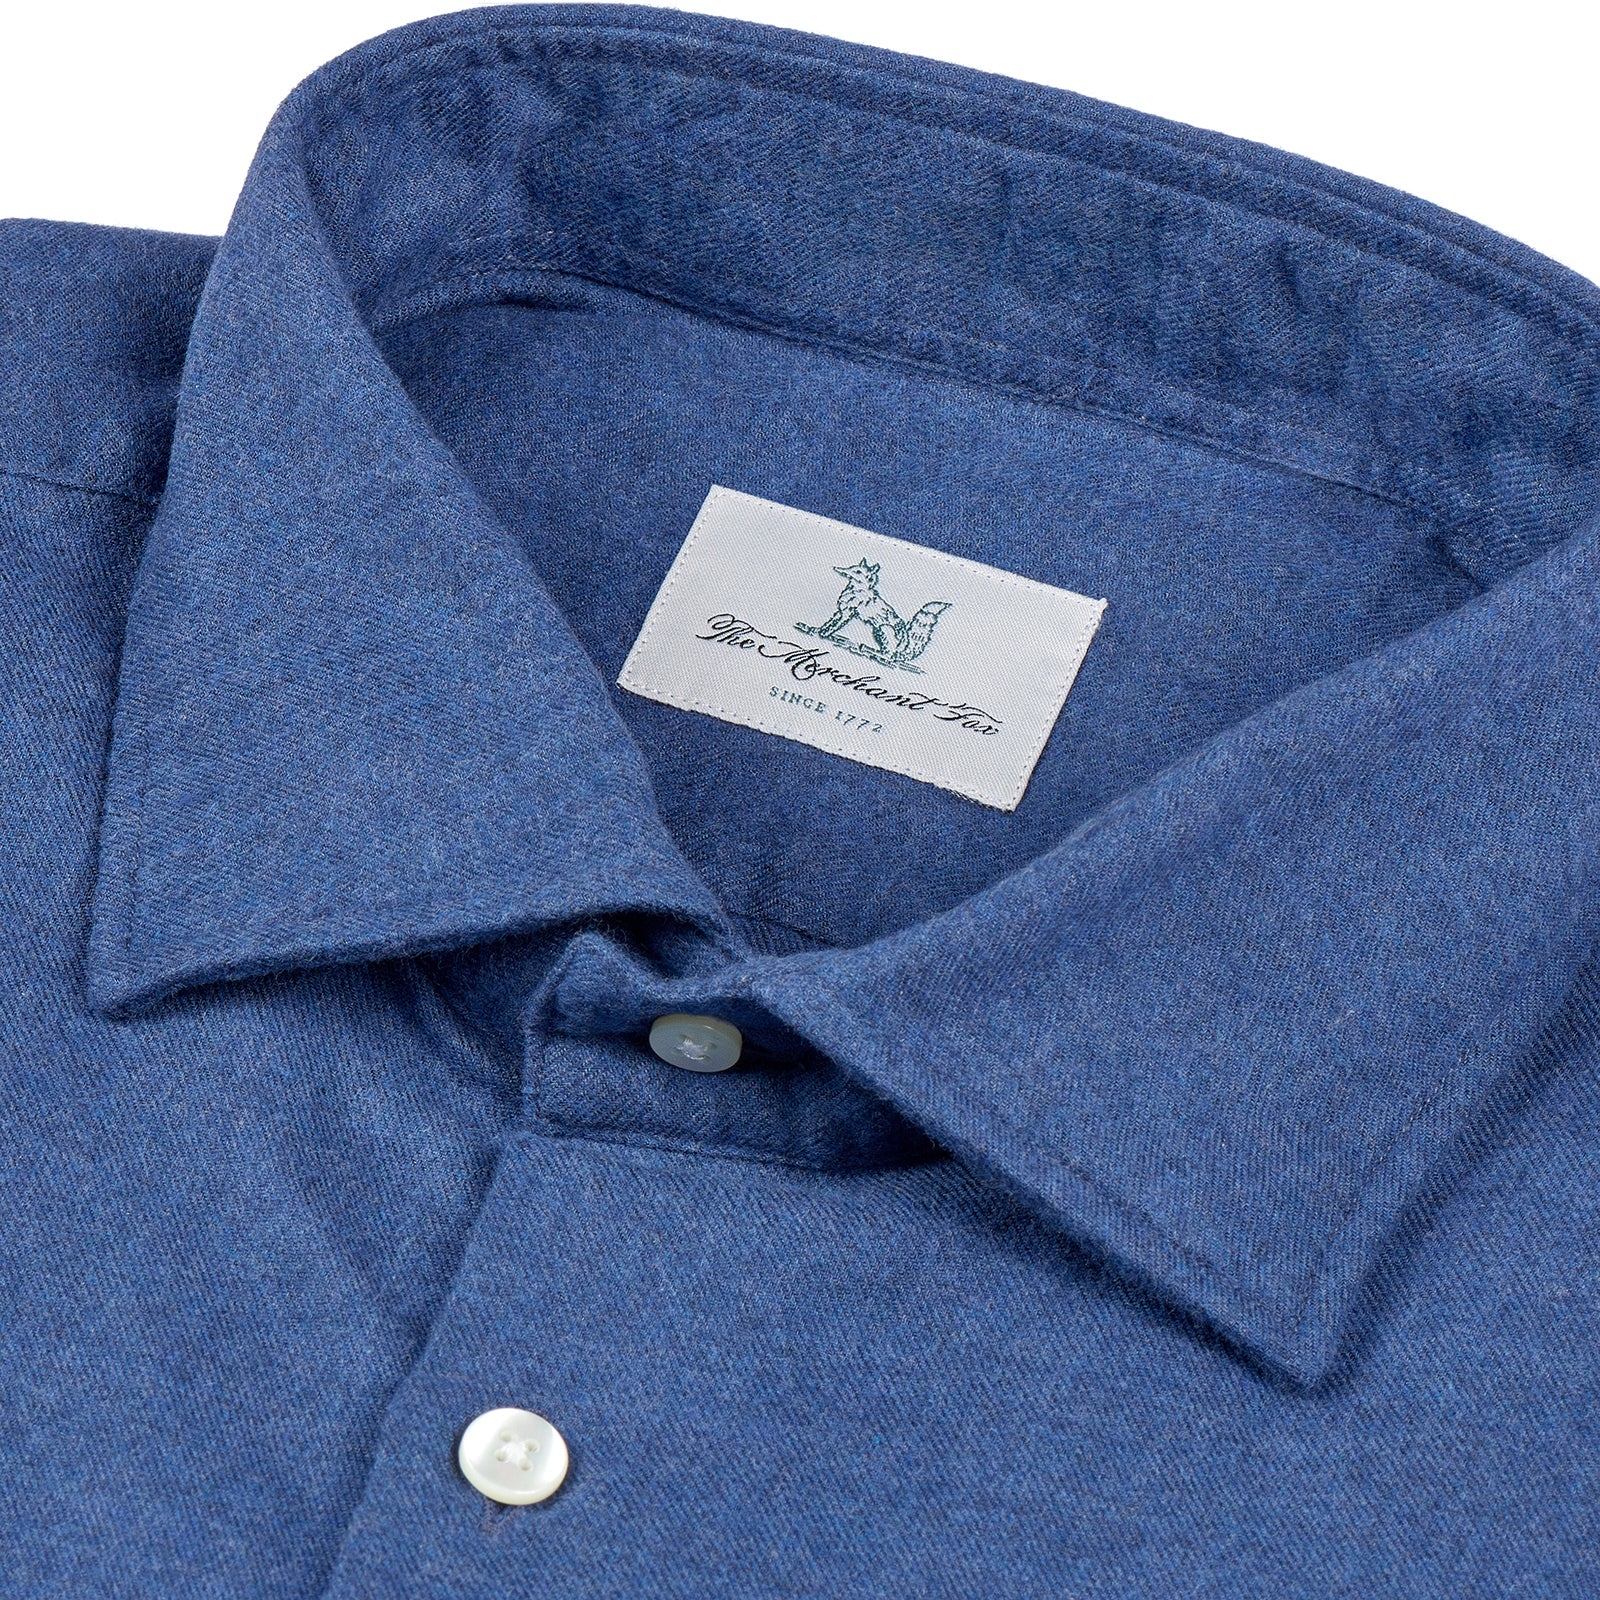 Brushed Cotton Flannel Shirt in  Denim Blue